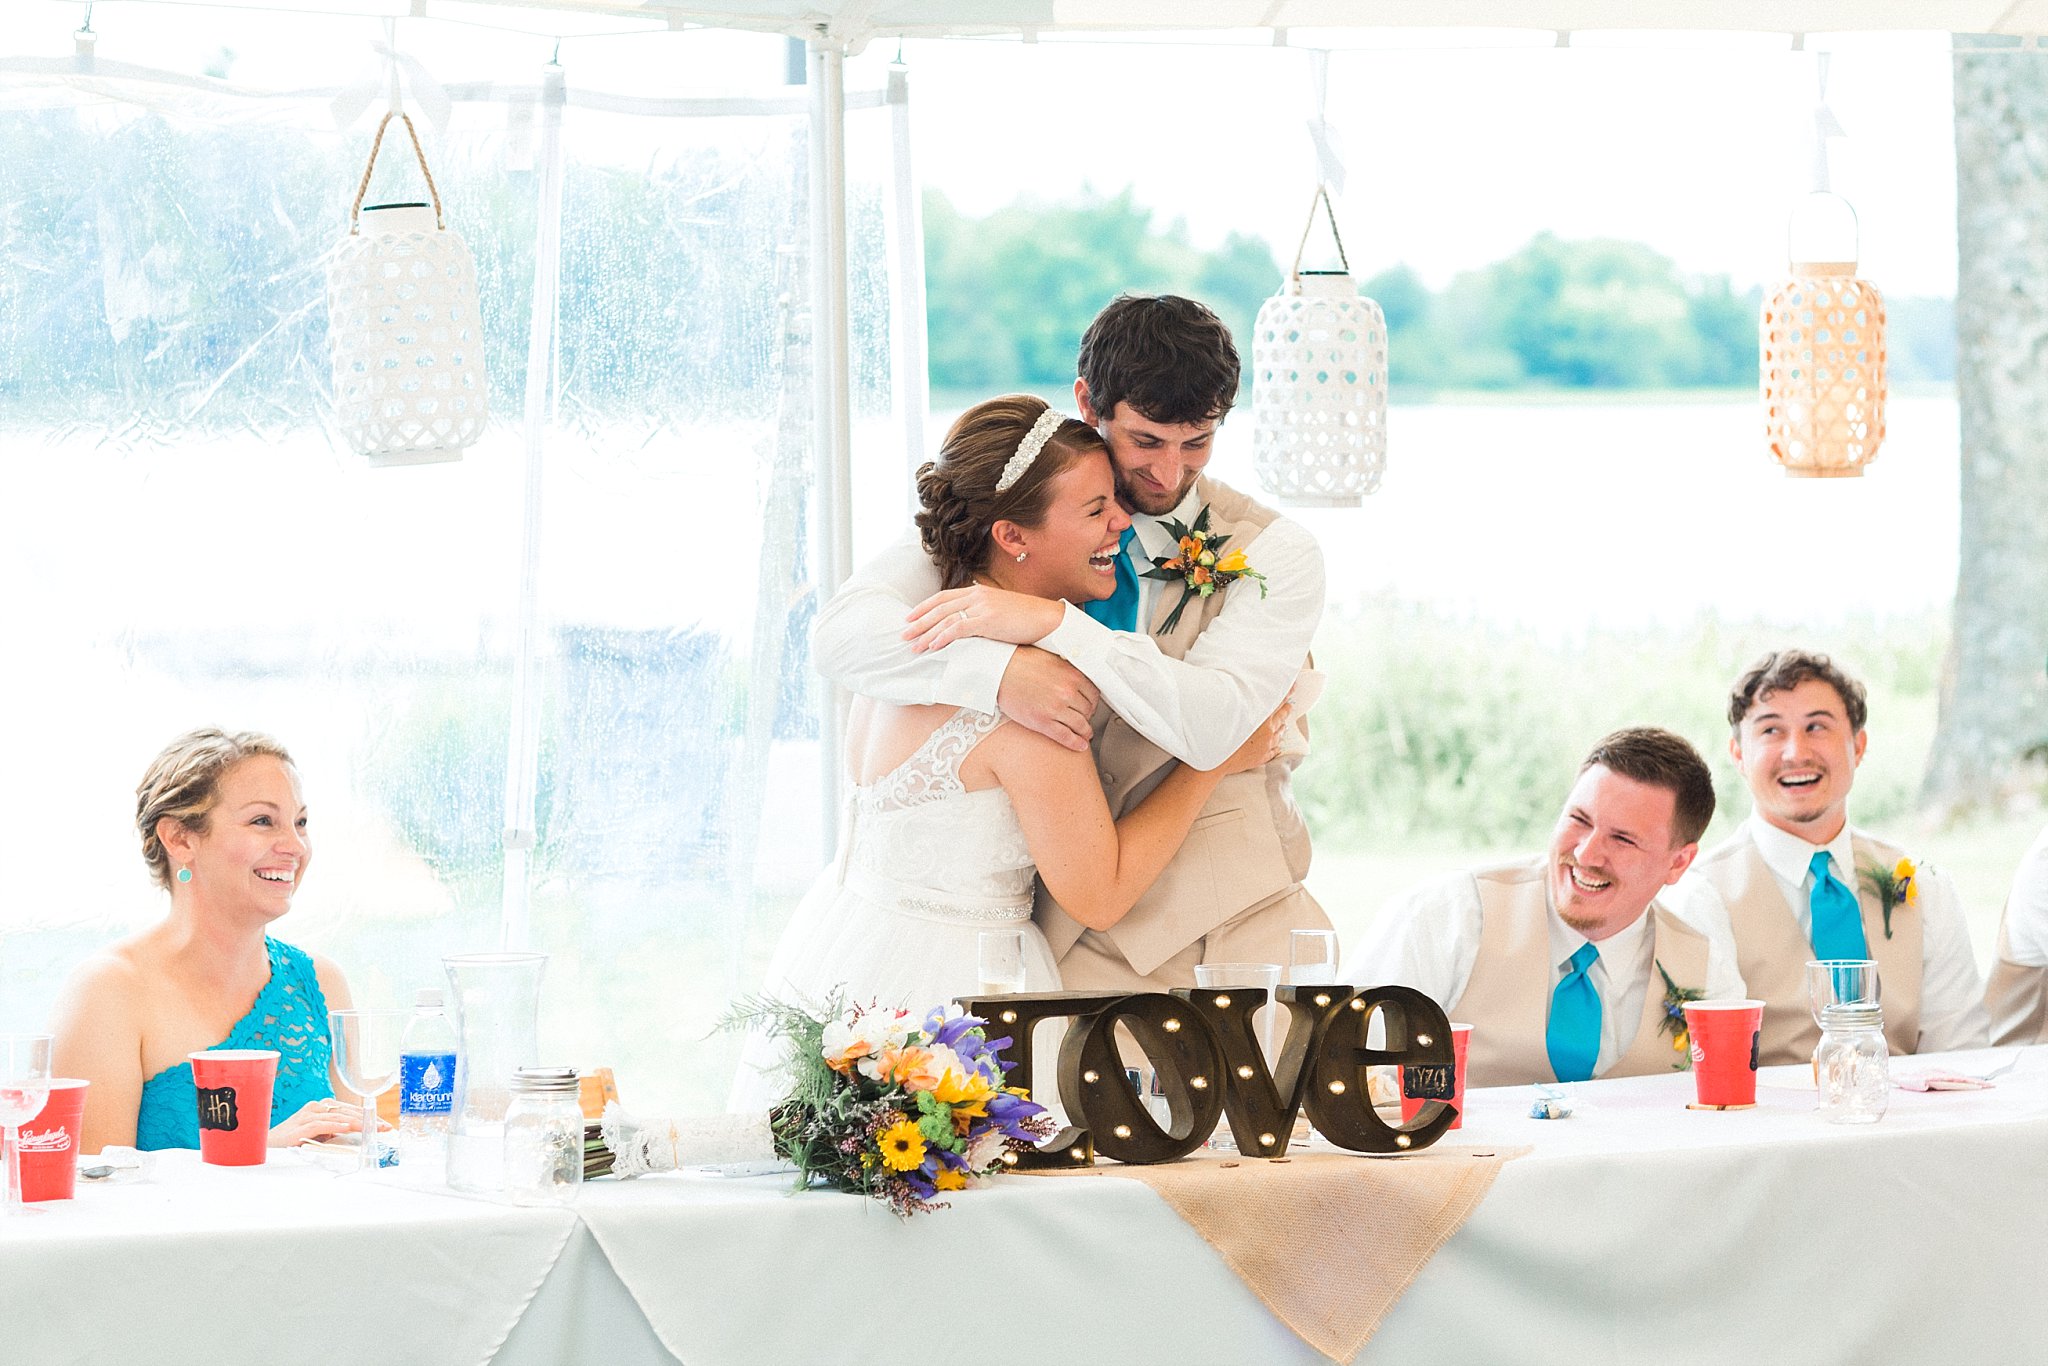 www.james-stokes.com | James Stokes Photography, LLC - Bride and groom at wedding reception - Wisconsin wedding photographer